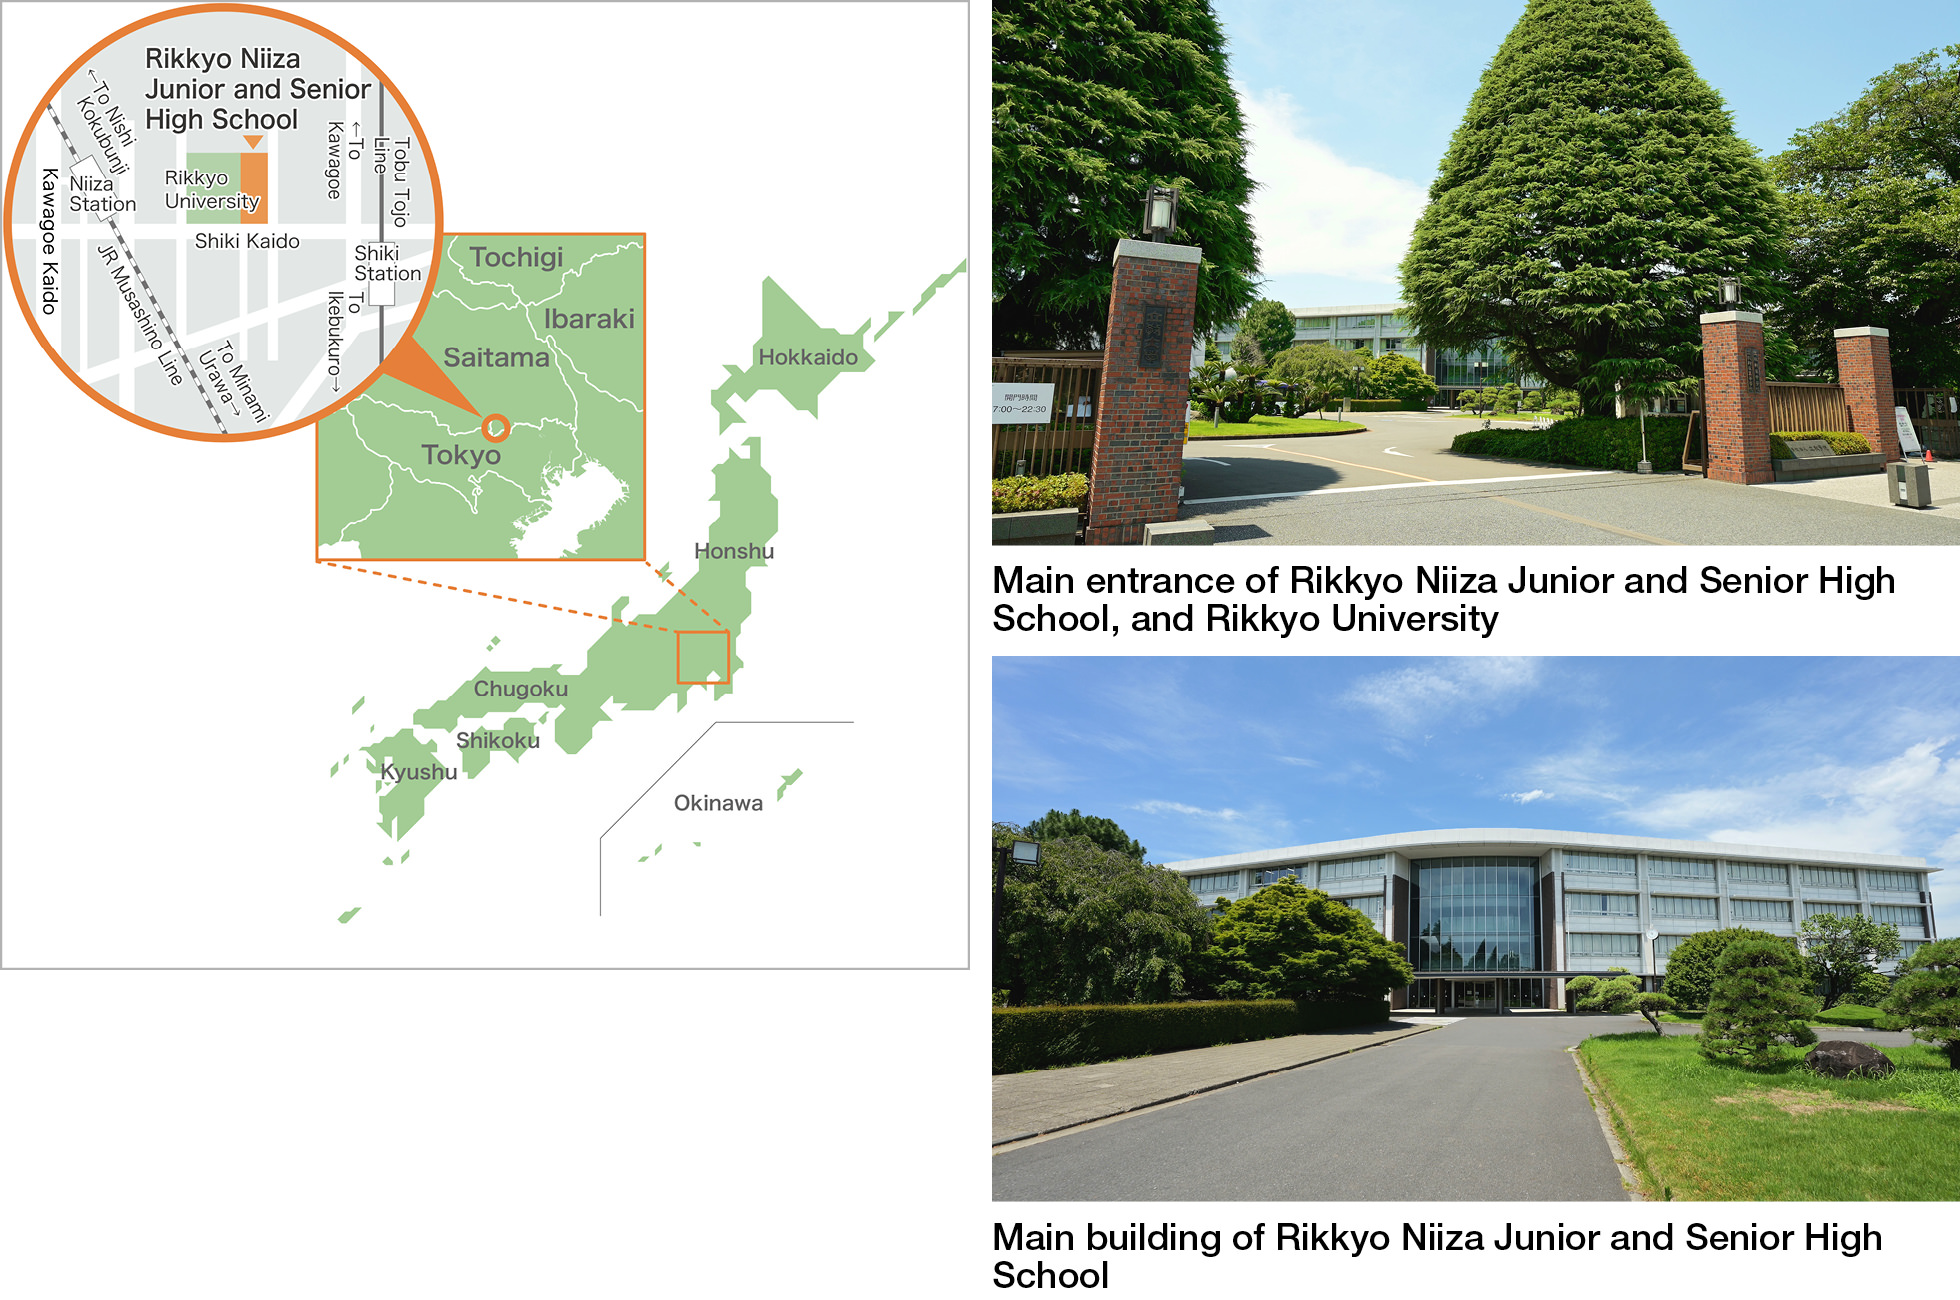 Main entrance of Rikkyo Niiza Junior and Senior High School, and Rikkyo University/Main building of Rikkyo Niiza Junior and Senior High School